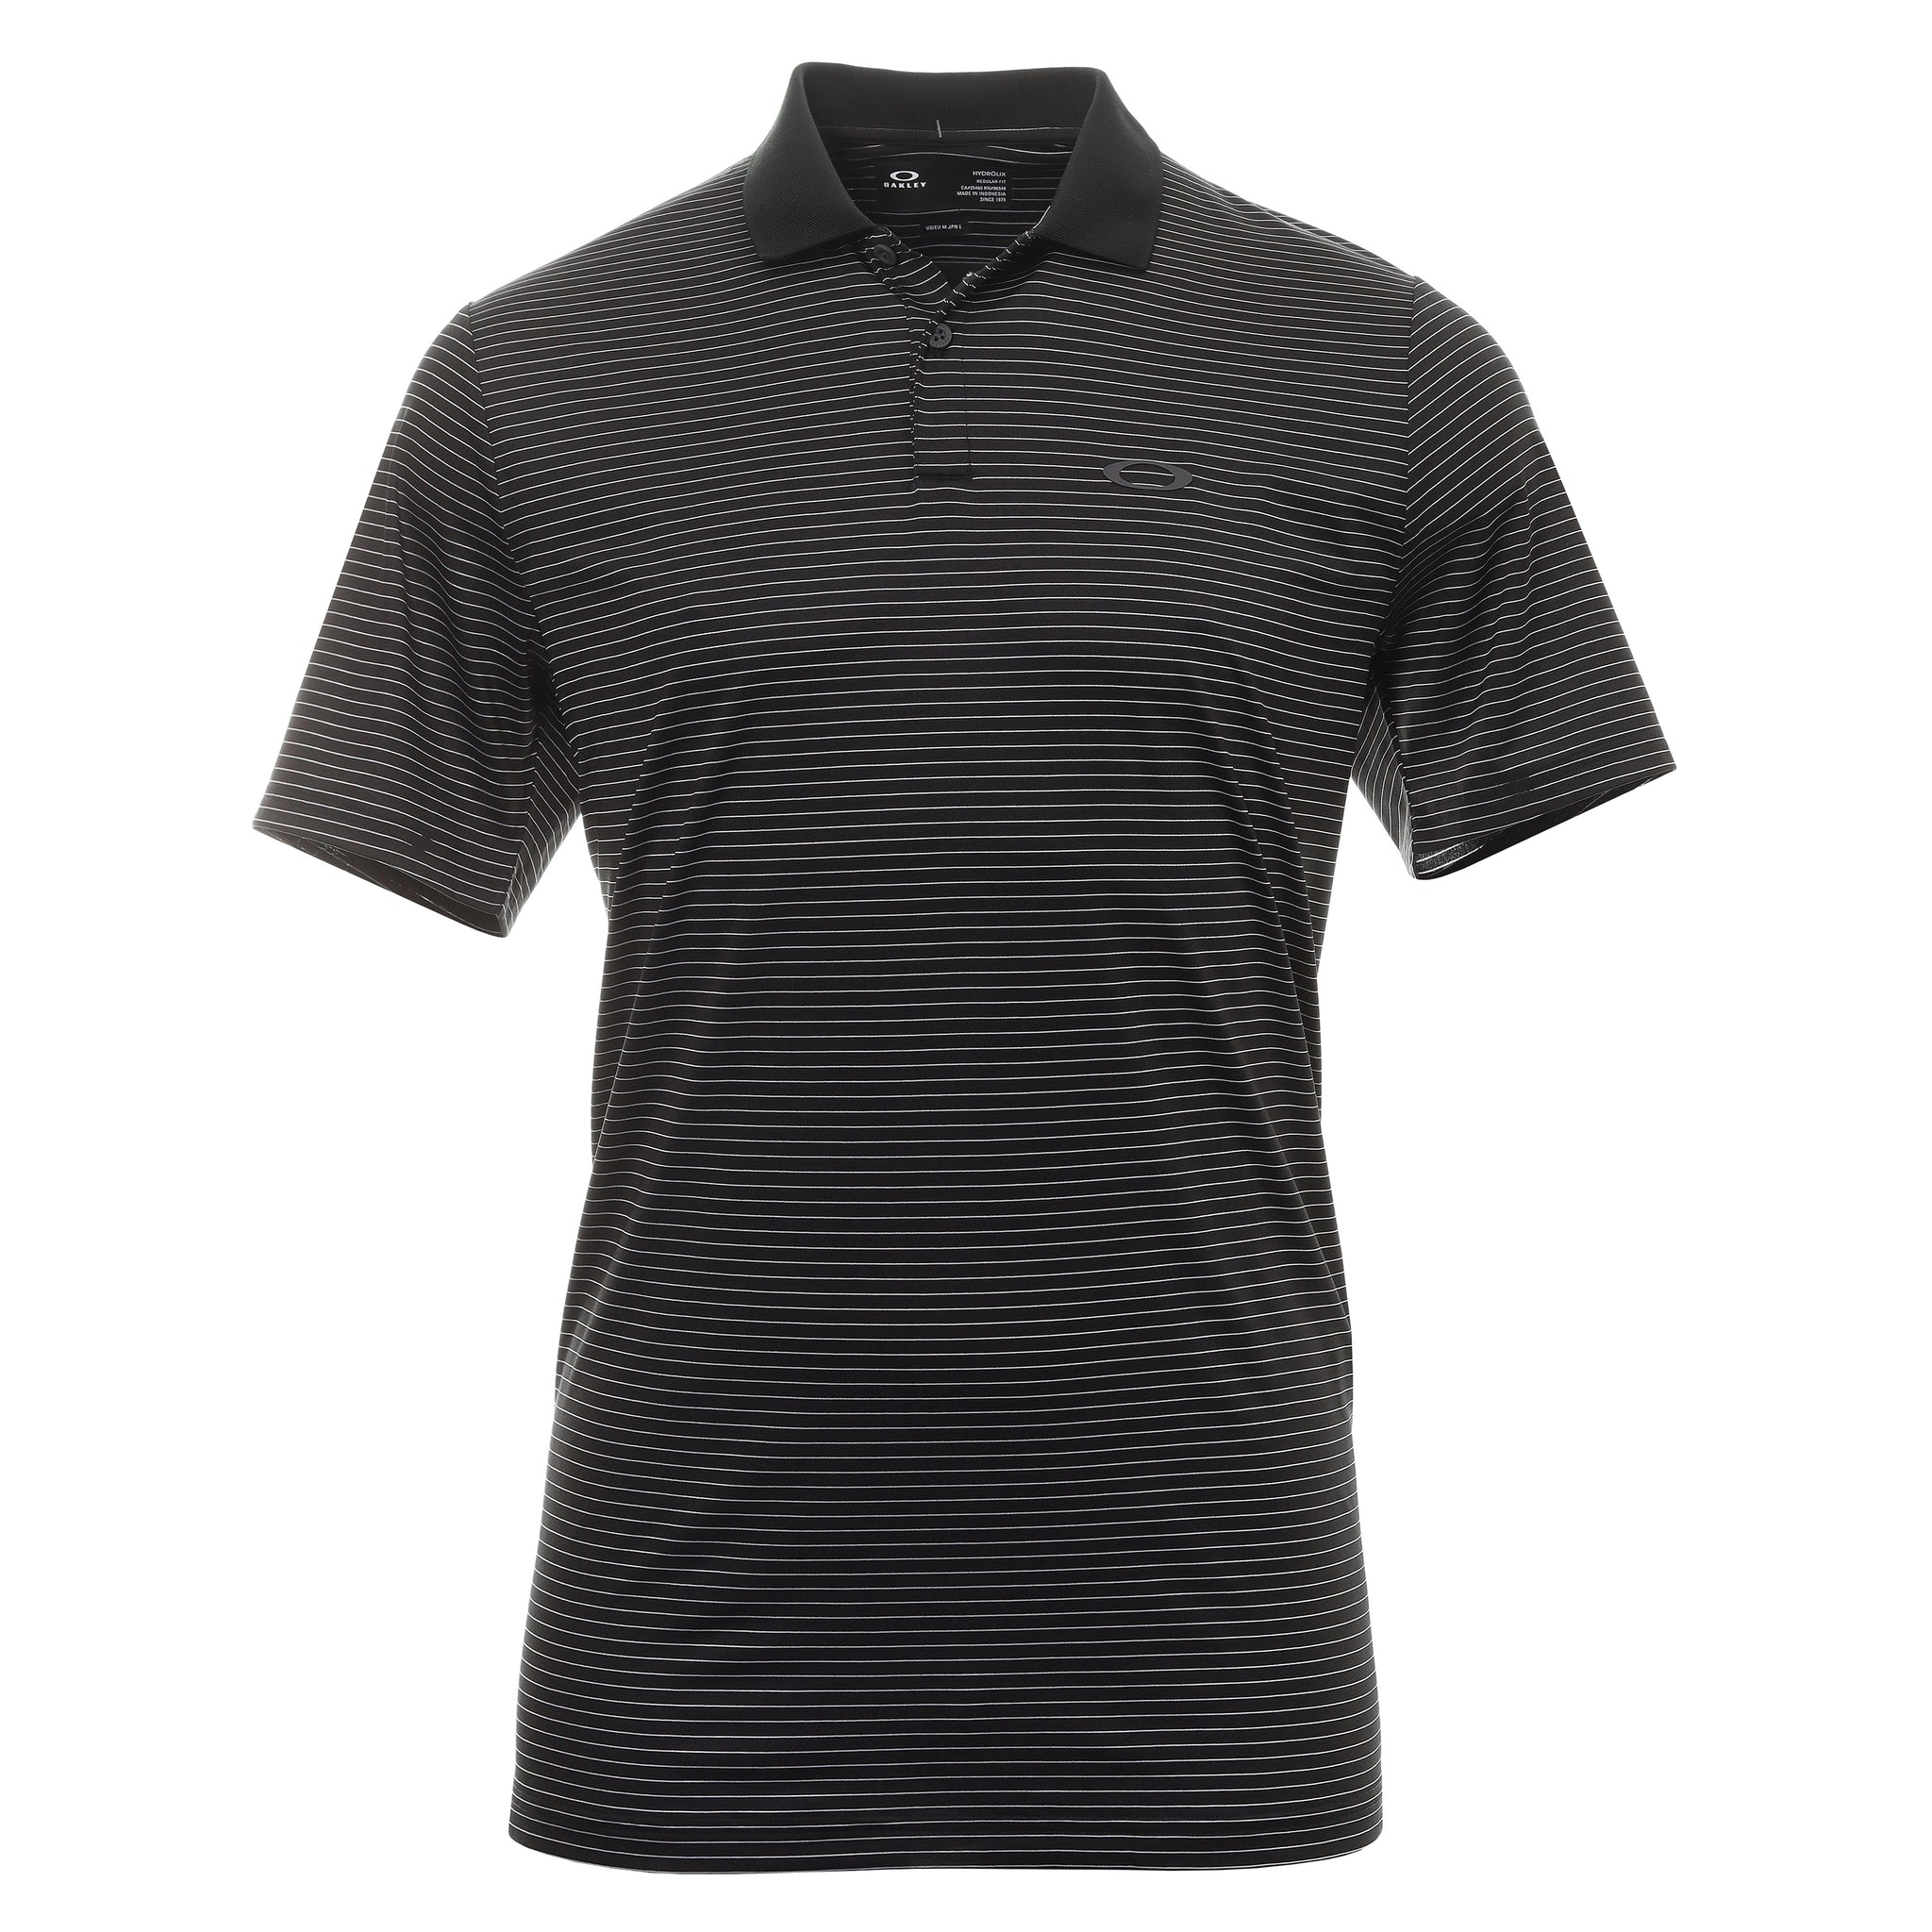 Oakley Golf Divisional Stripe Shirt